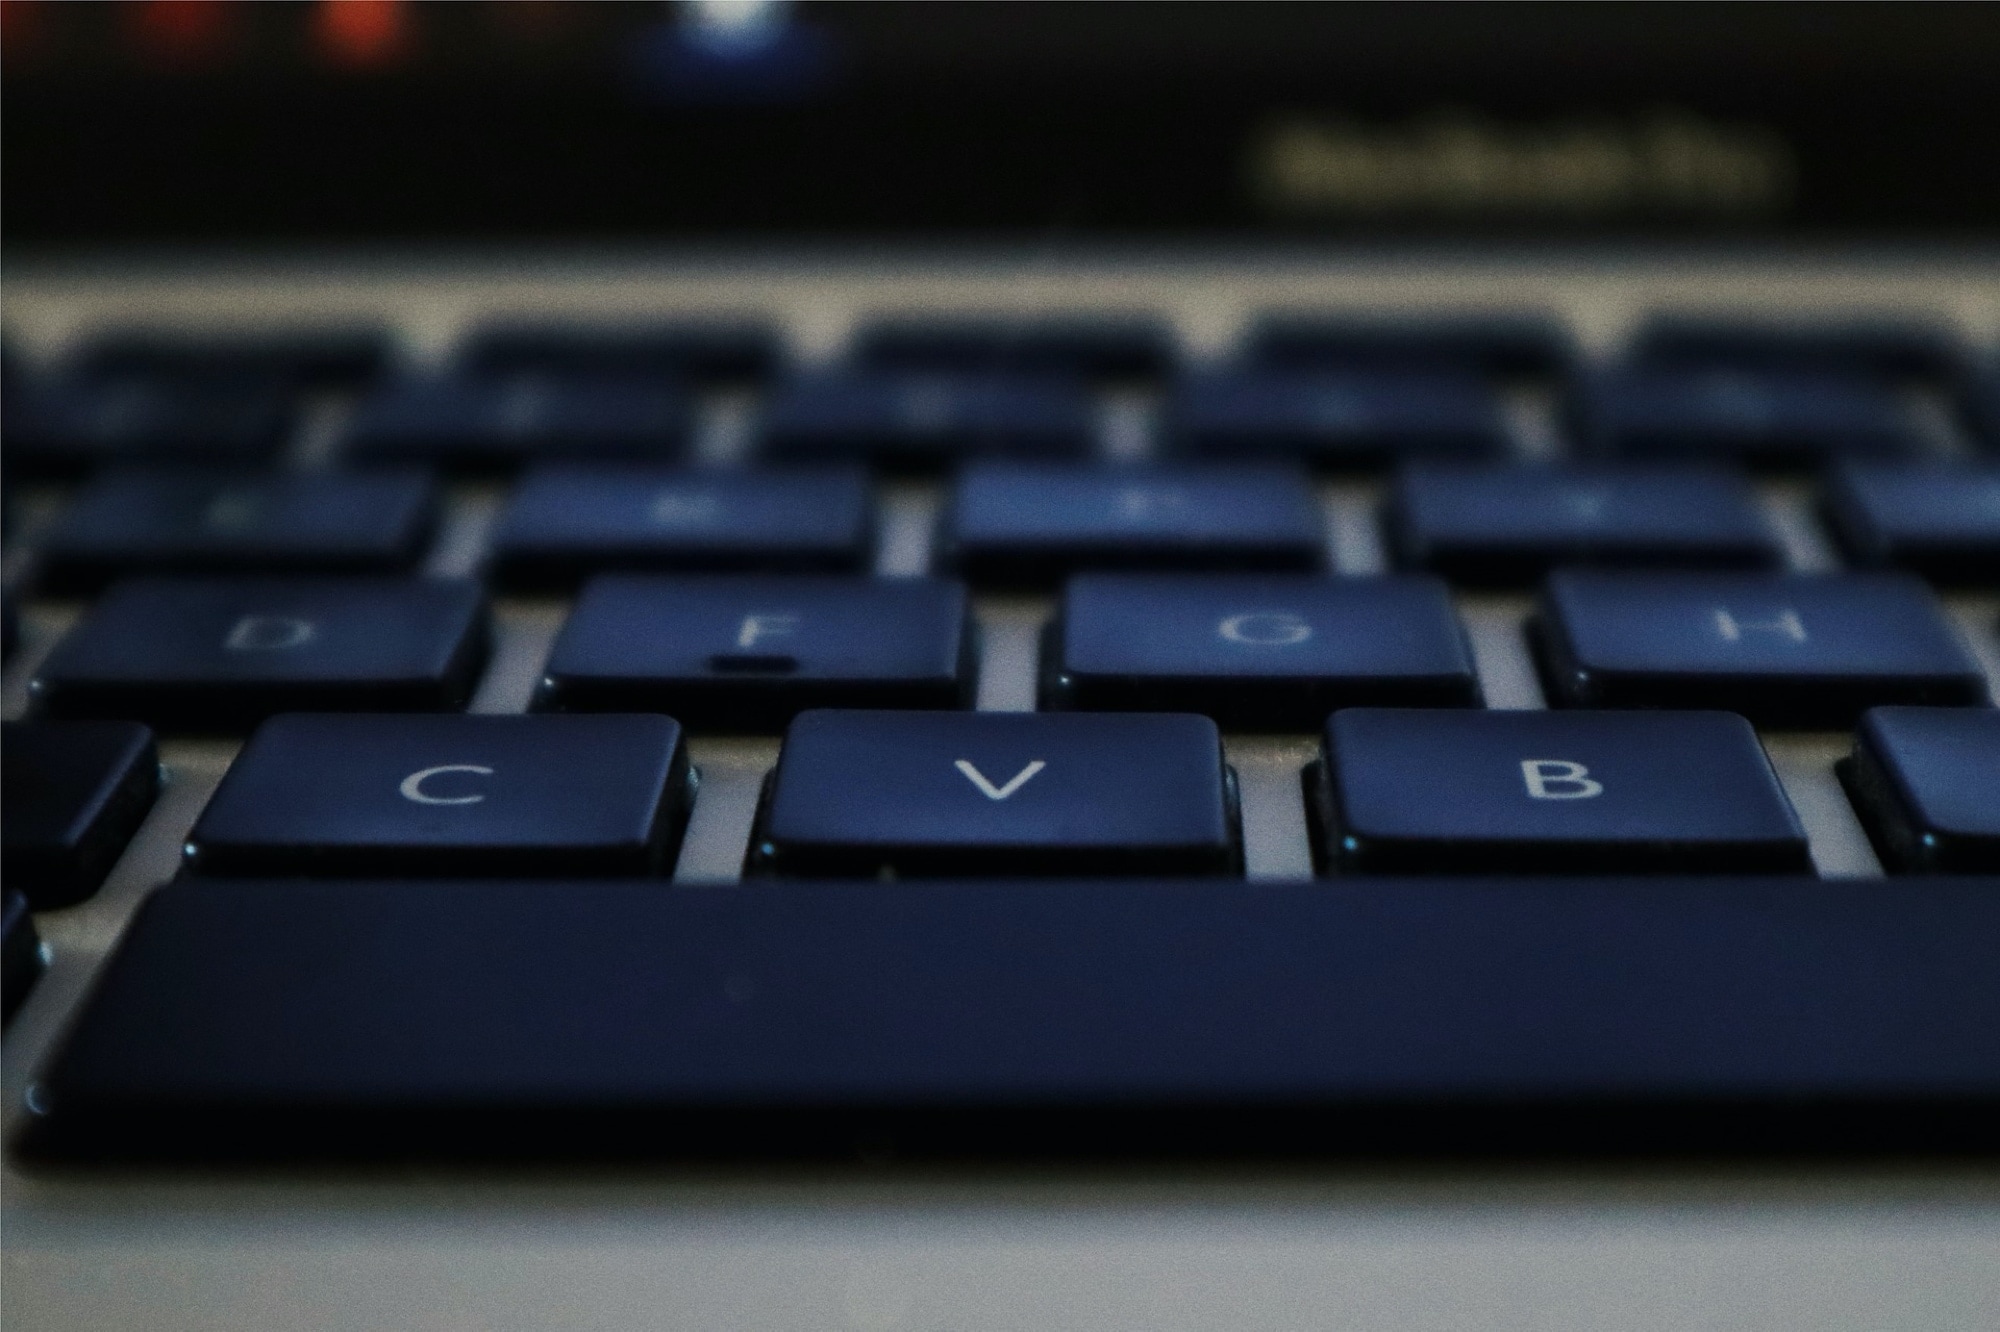 MacBook keyboard -Slack keyboard shortcuts